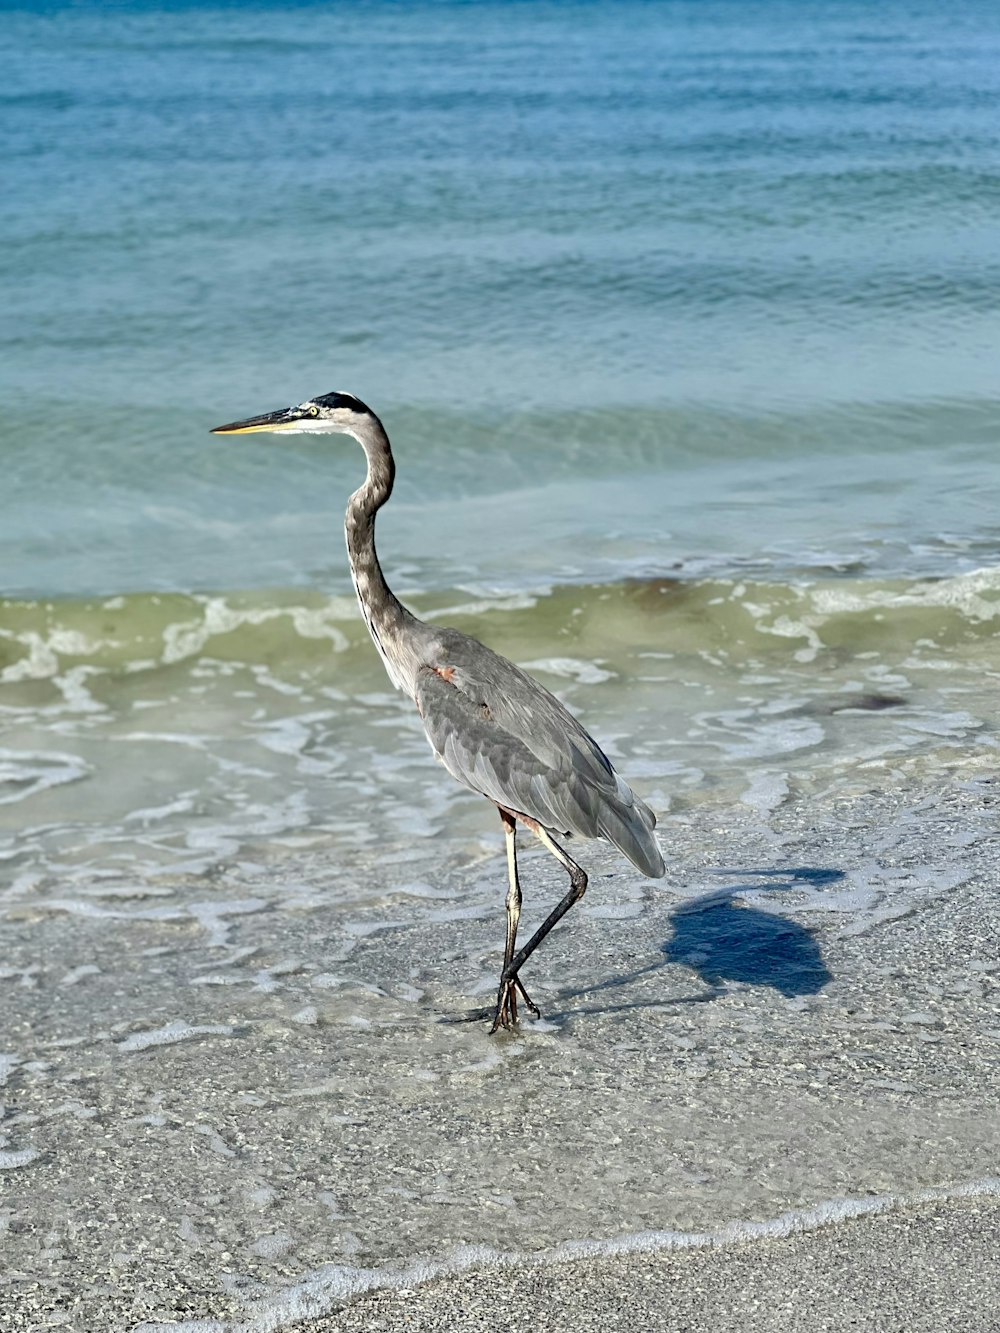 a bird is walking on the beach near the water